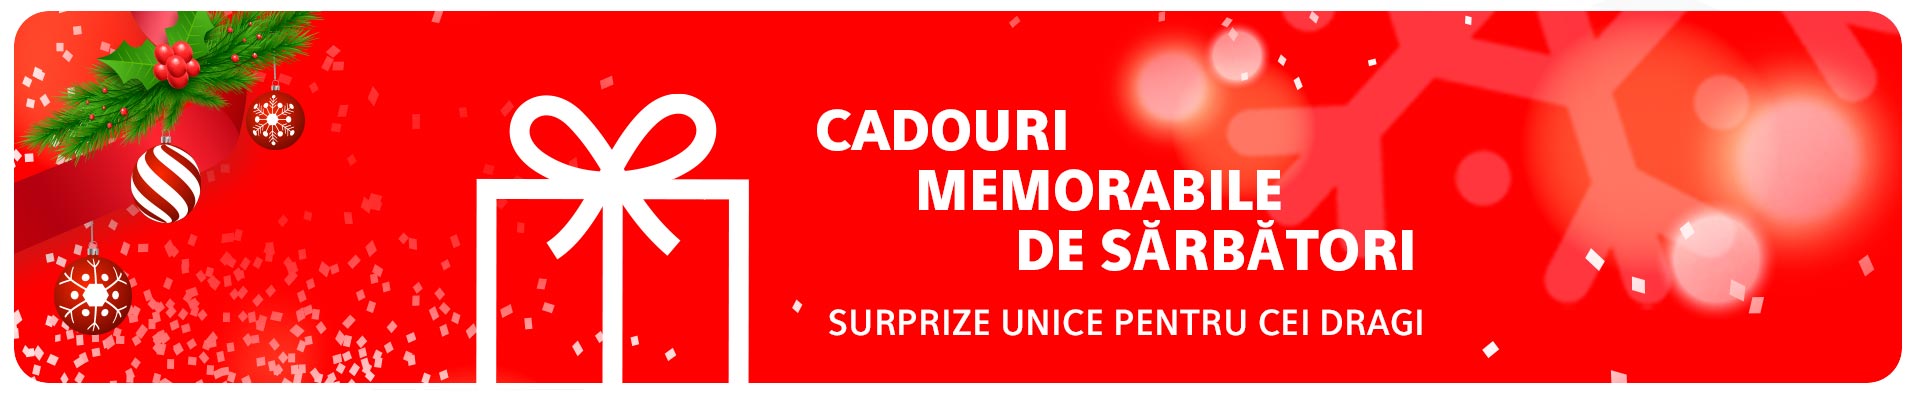 Banner Cadouri memorabile